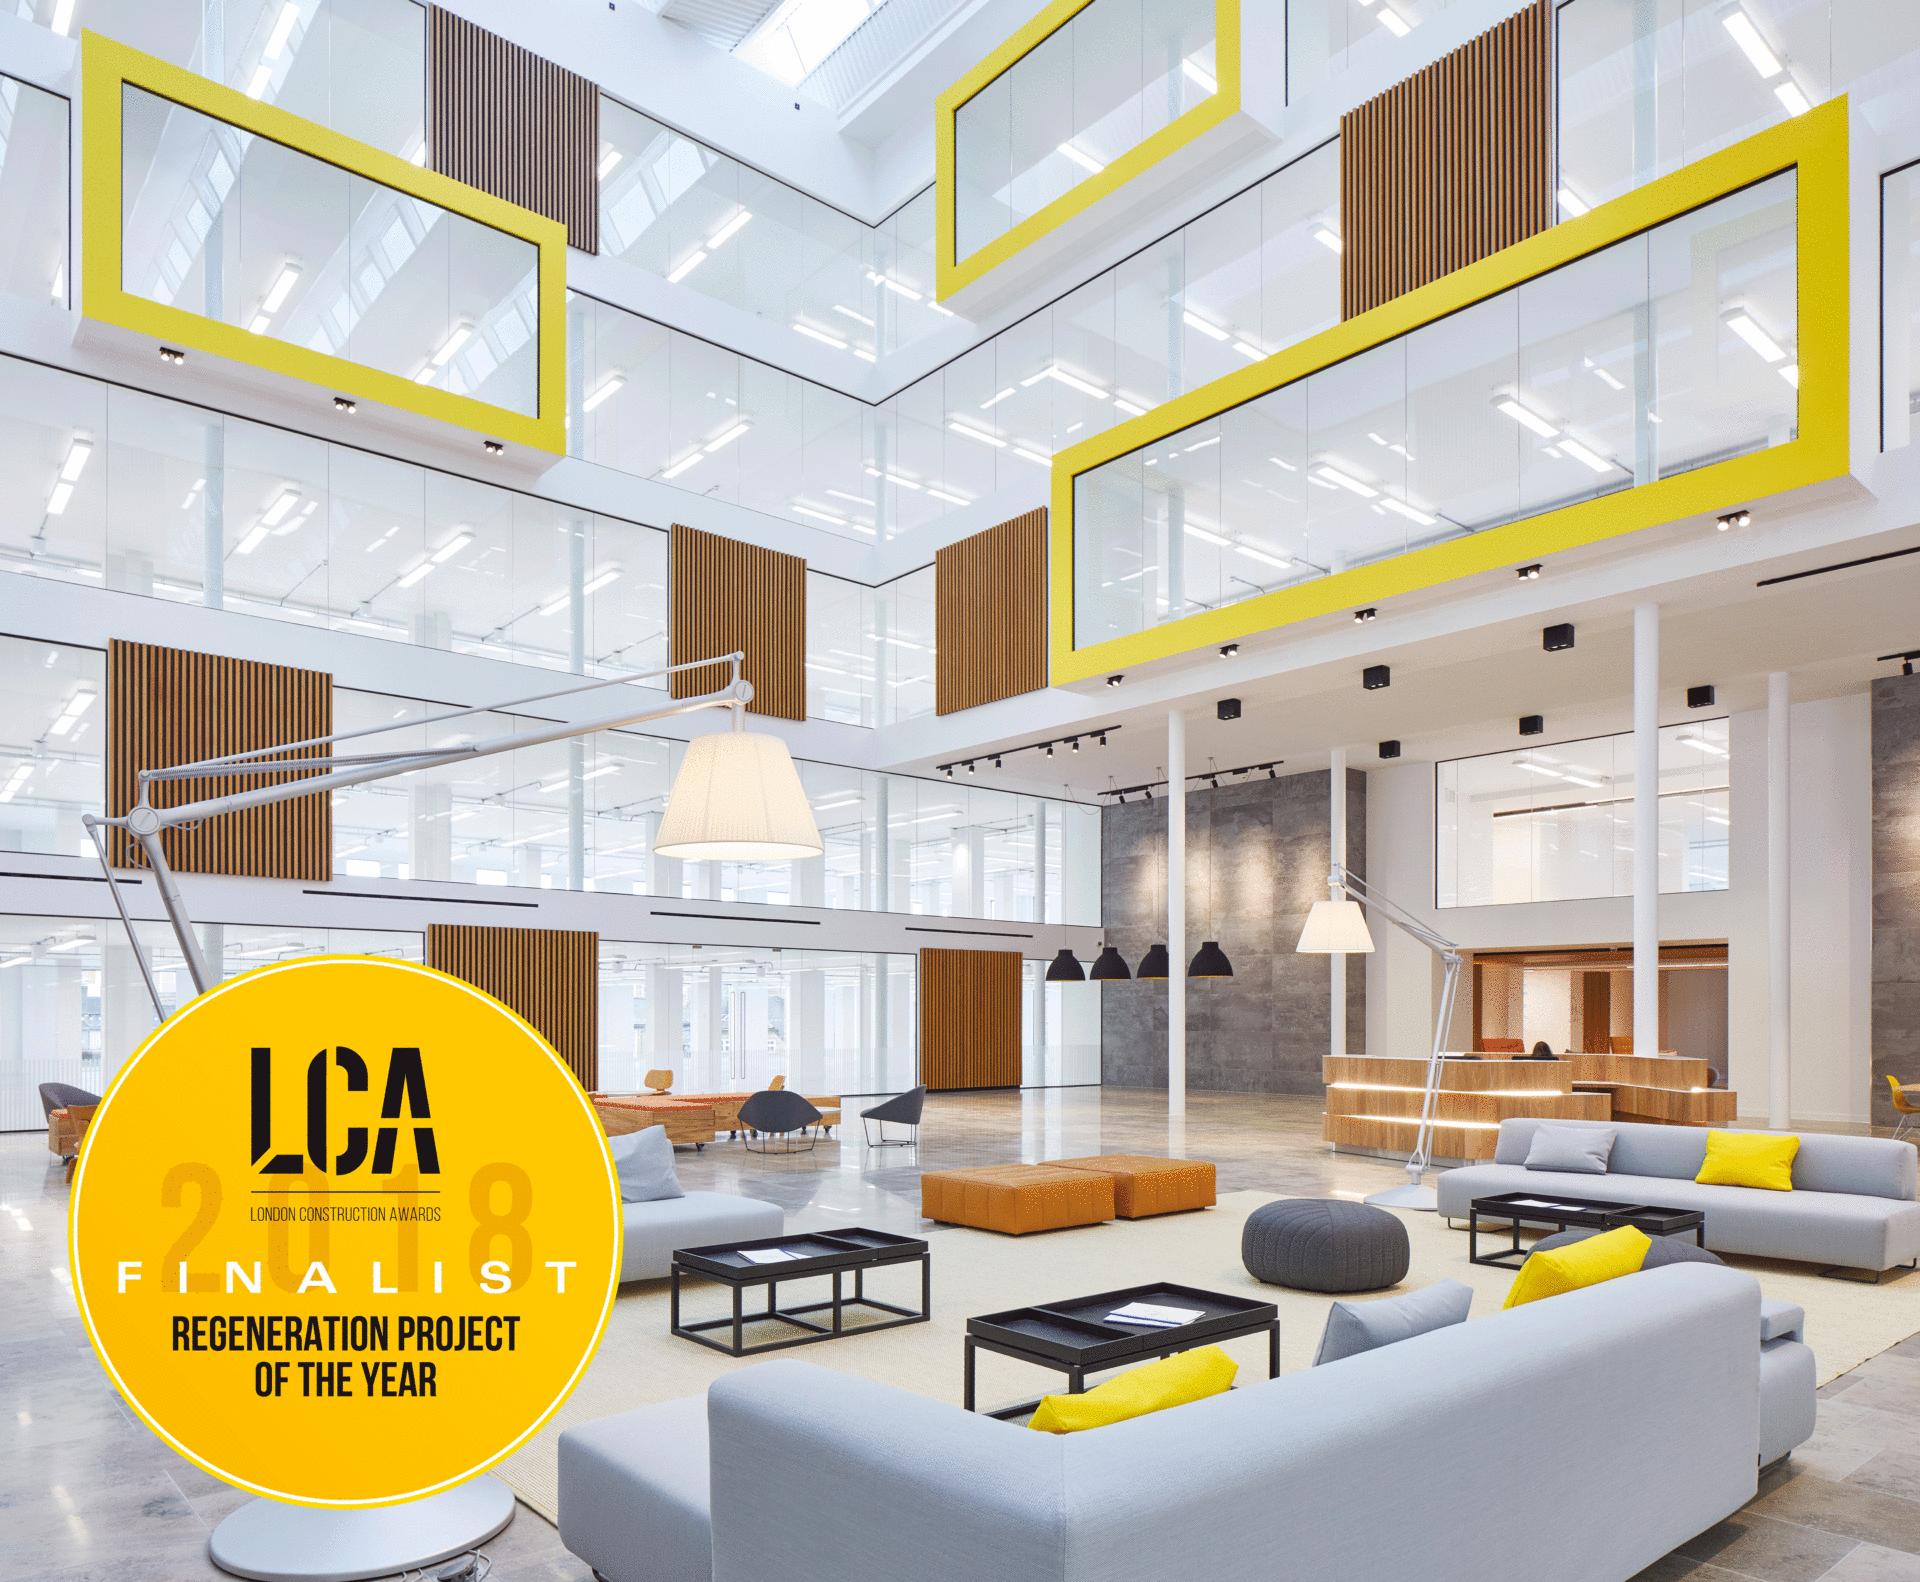 London Build London Construction Award Awards Charter Building Interior Regeneration Project Finalist